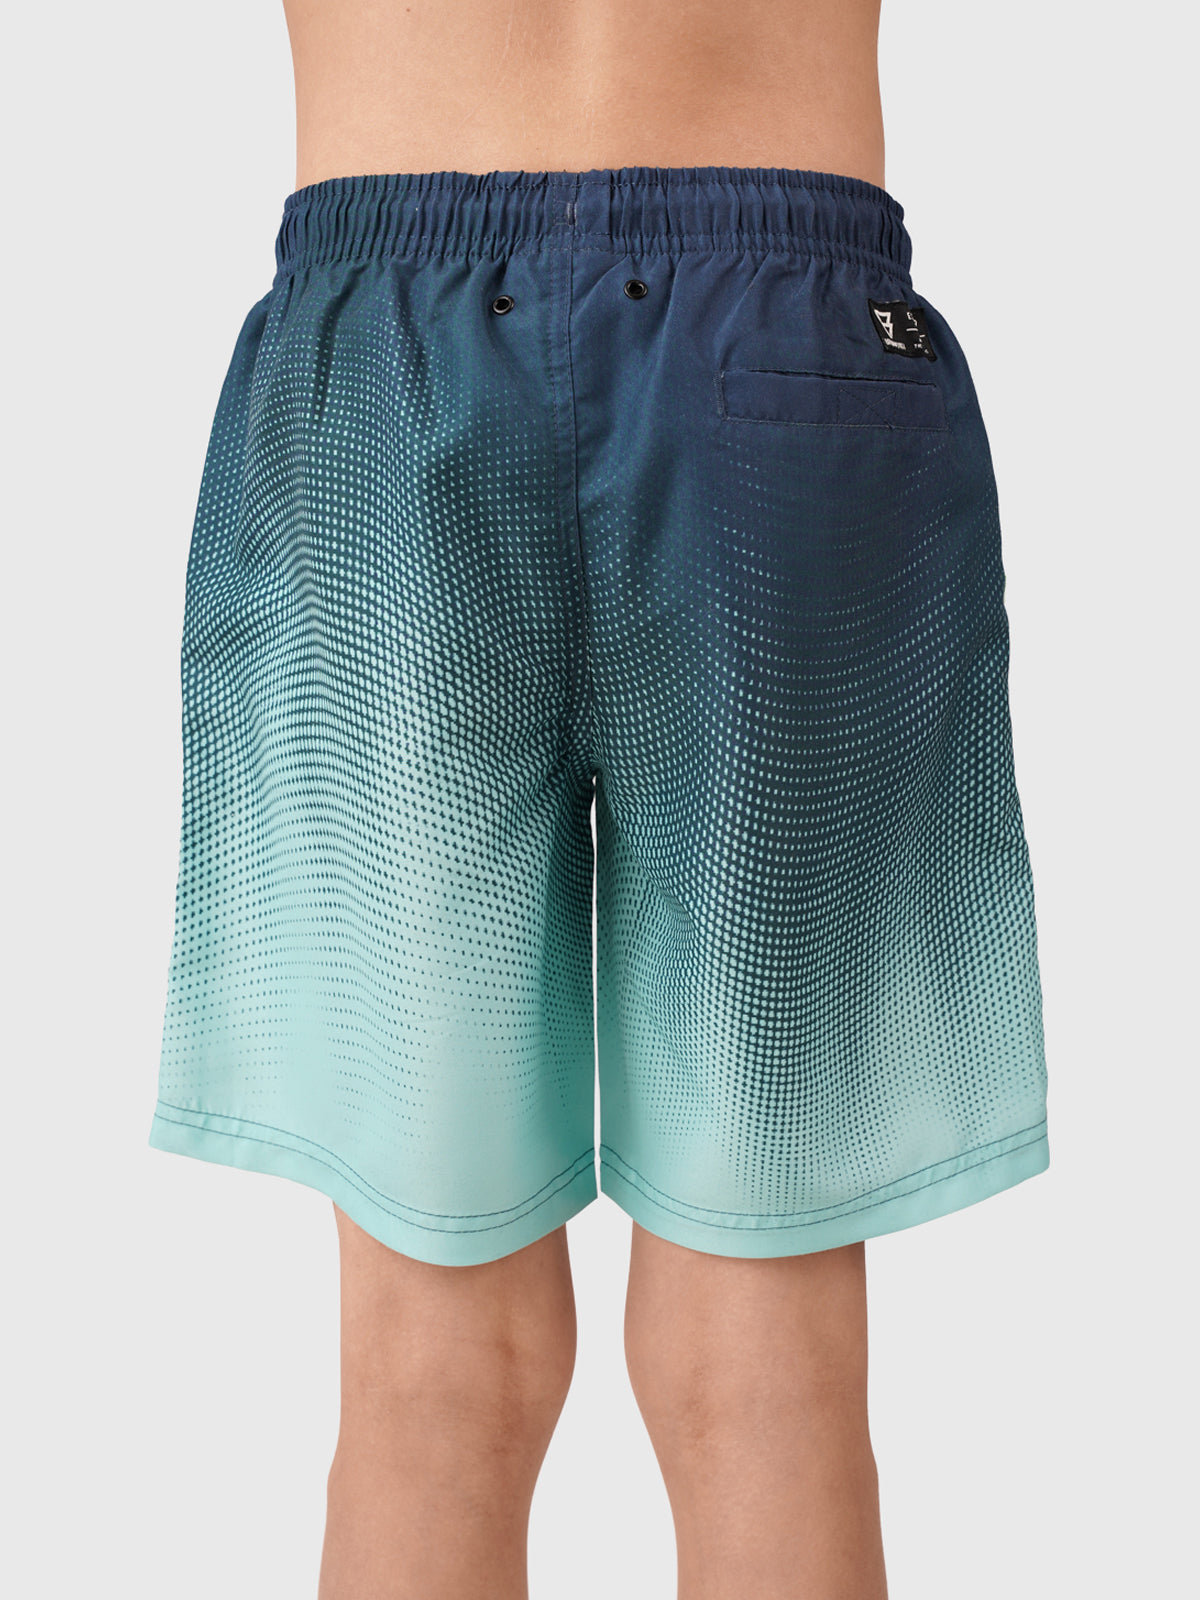 Rocksery Boys Swim Shorts | Green